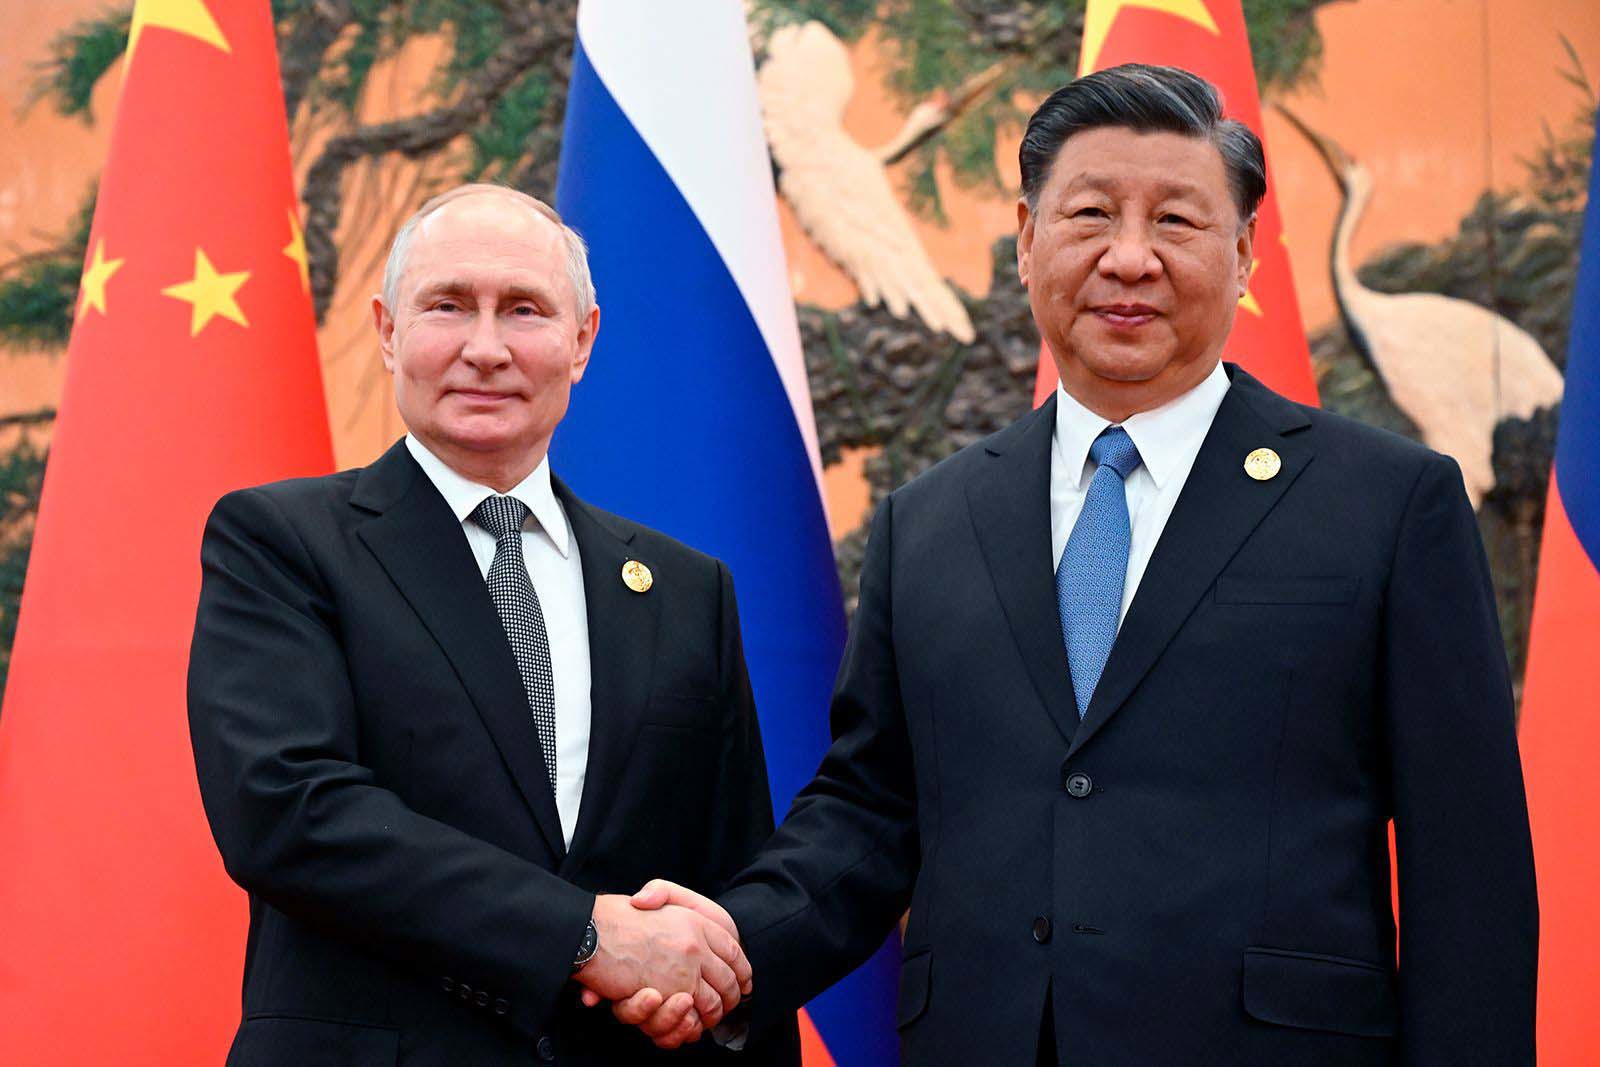 China’s Xi Jinping rolls out red carpet for close friend Putin